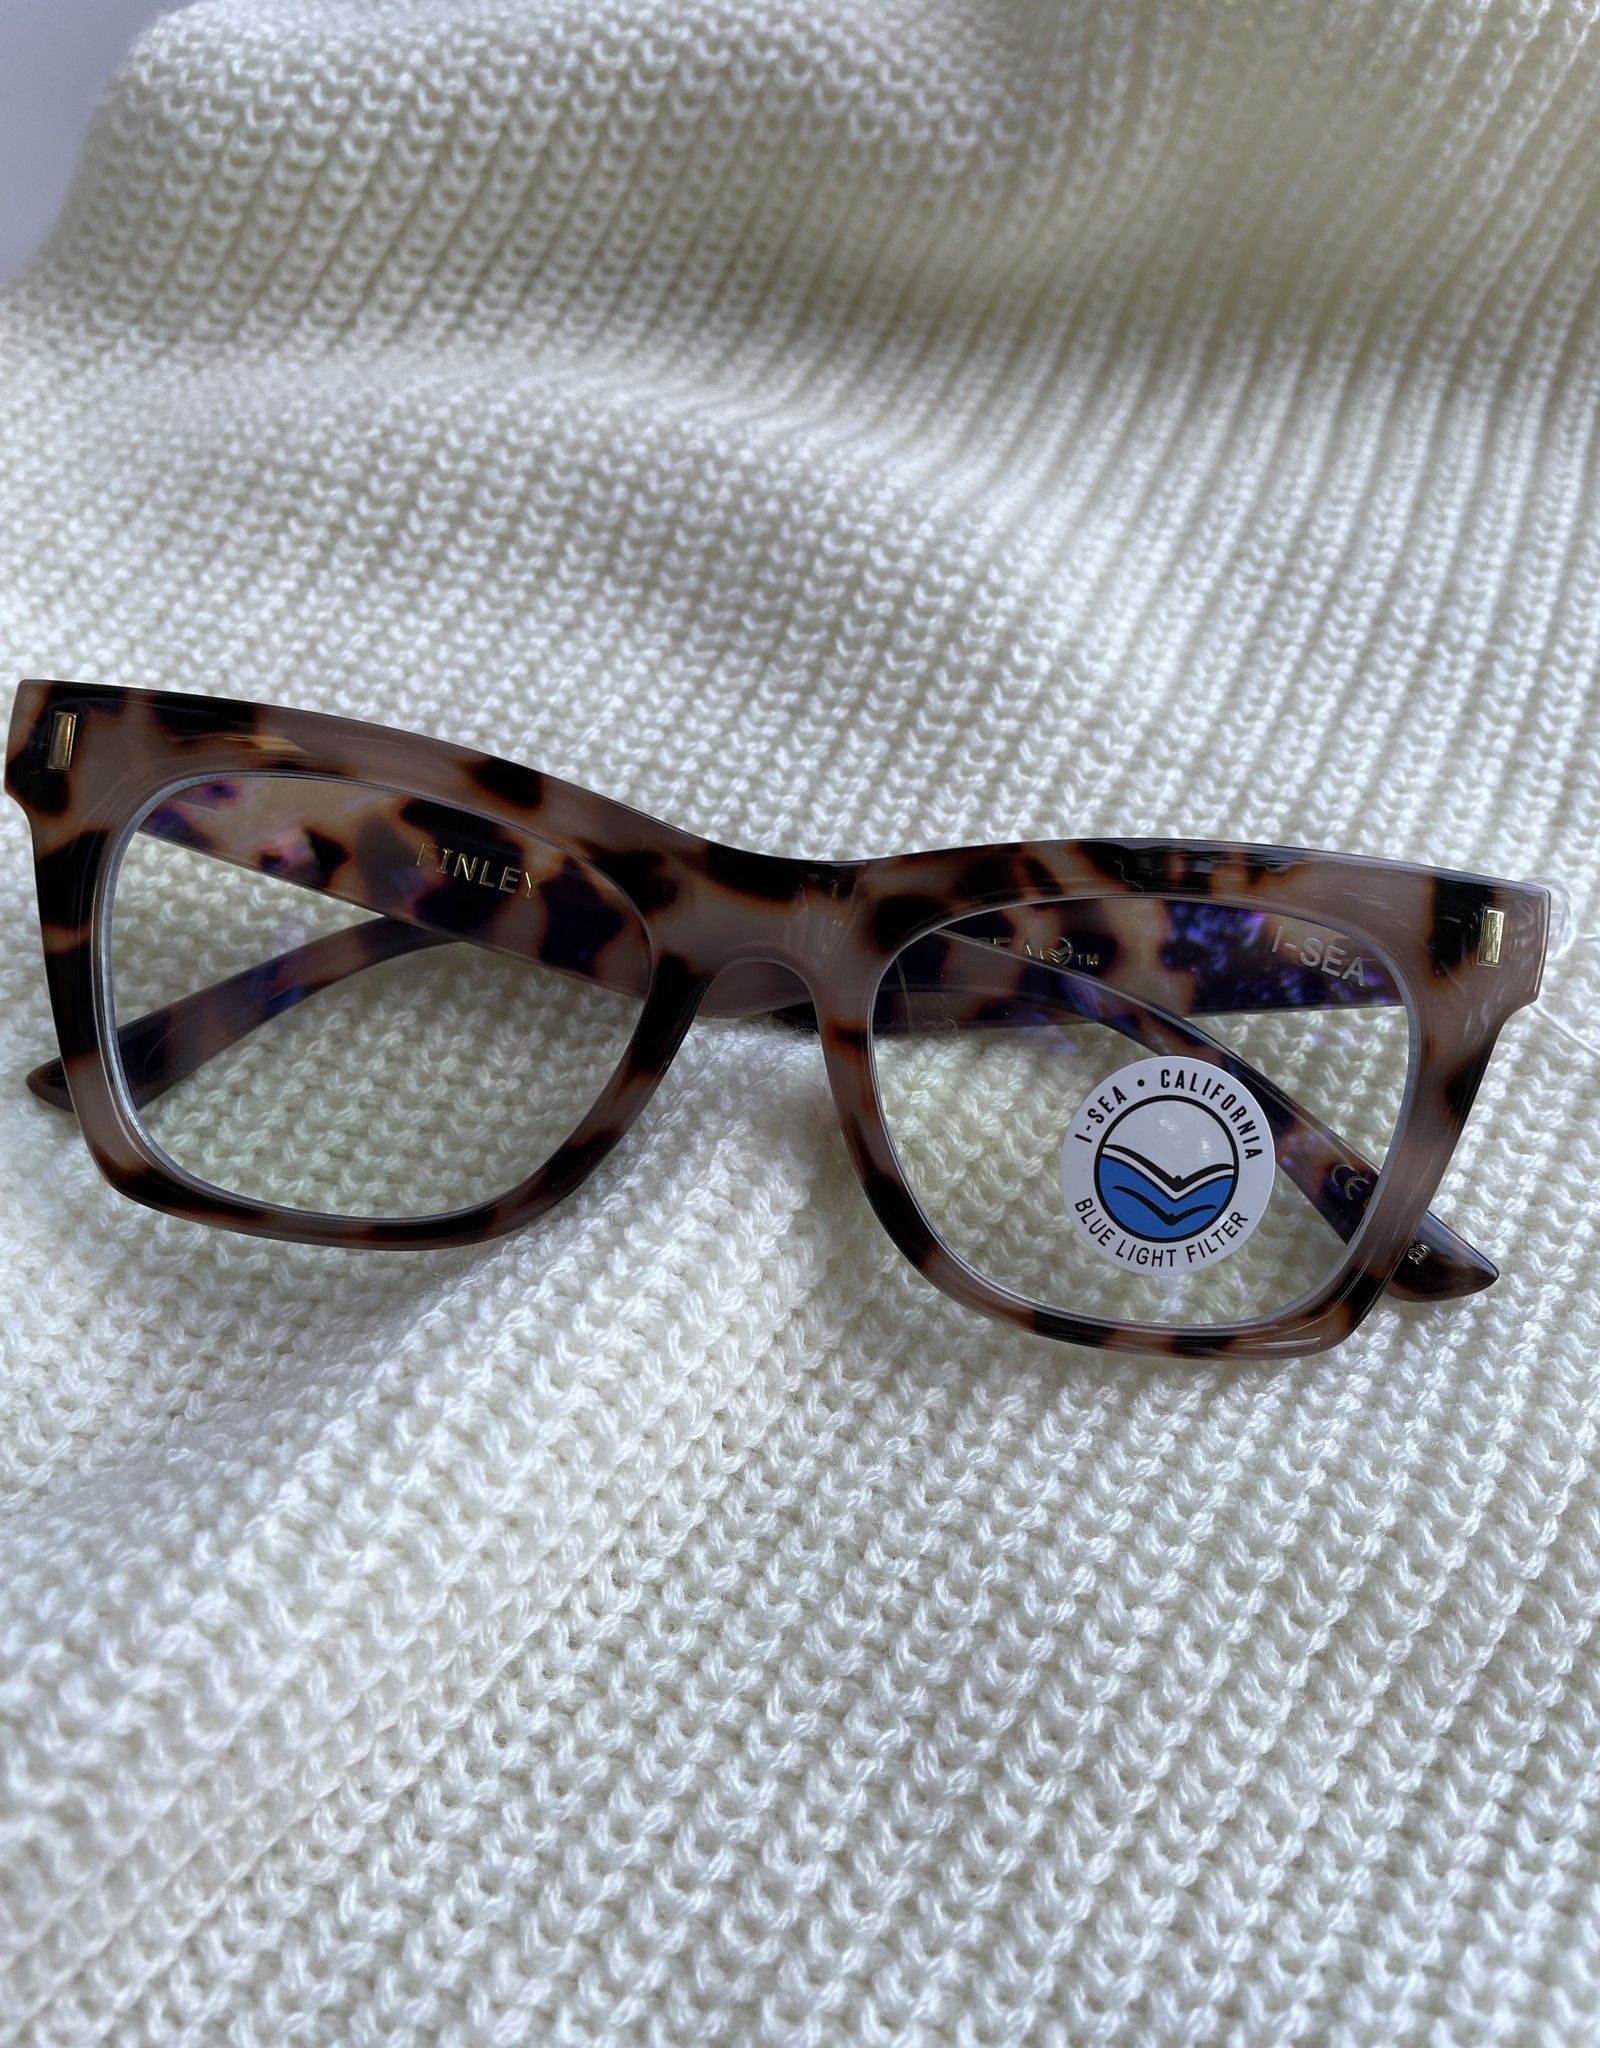 I SEA Finley Blue Light Glasses